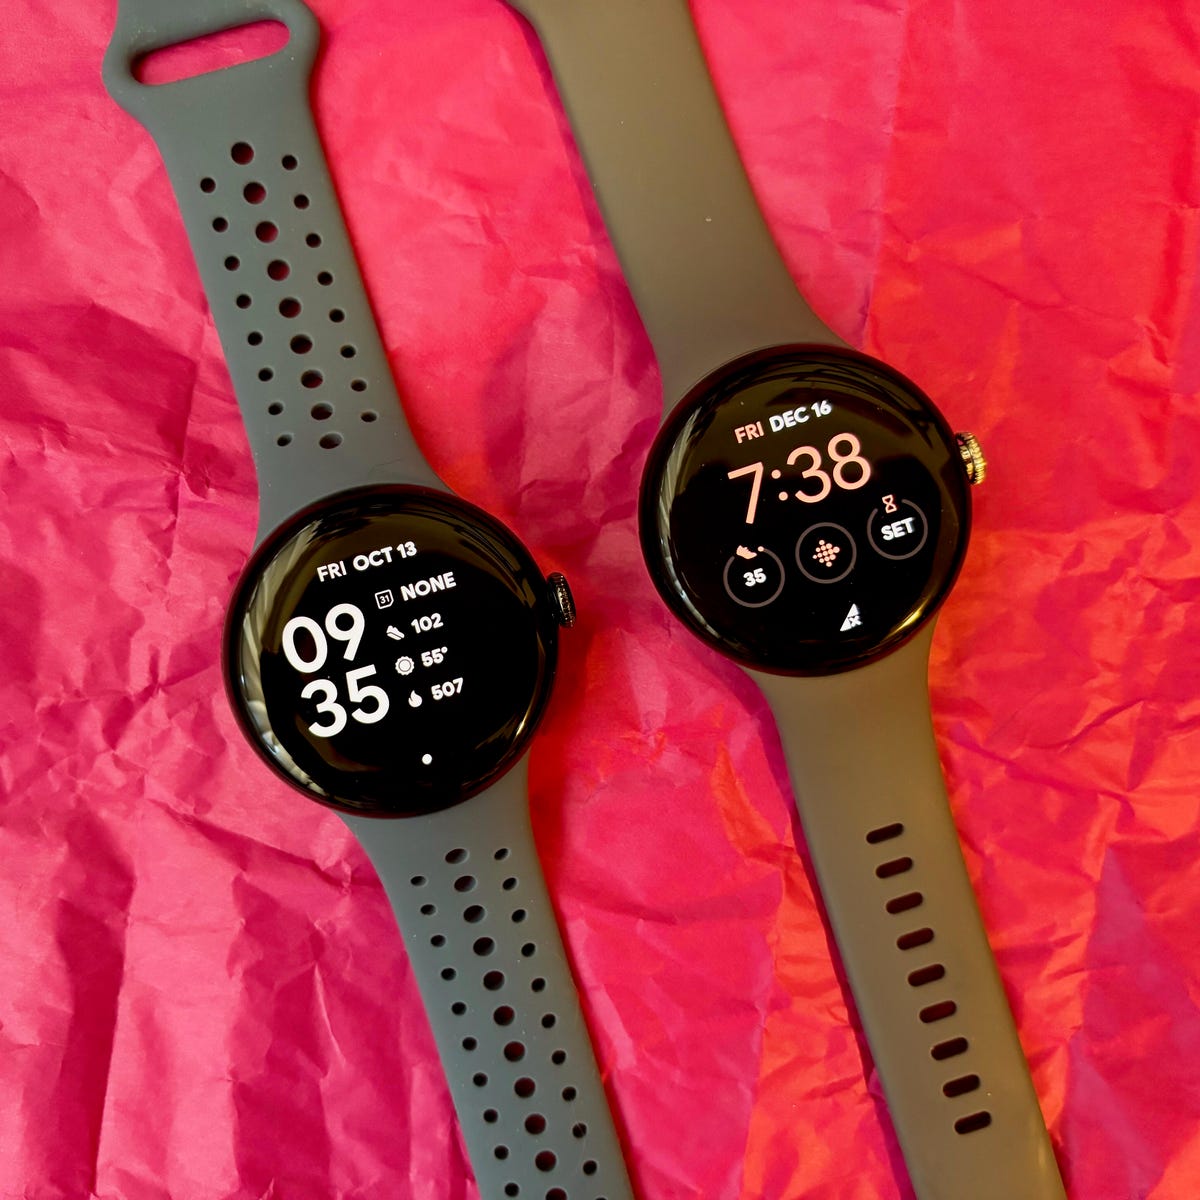 Google Pixel Watch 2 vs. Pixel Watch: Is It Worth Upgrading? - CNET